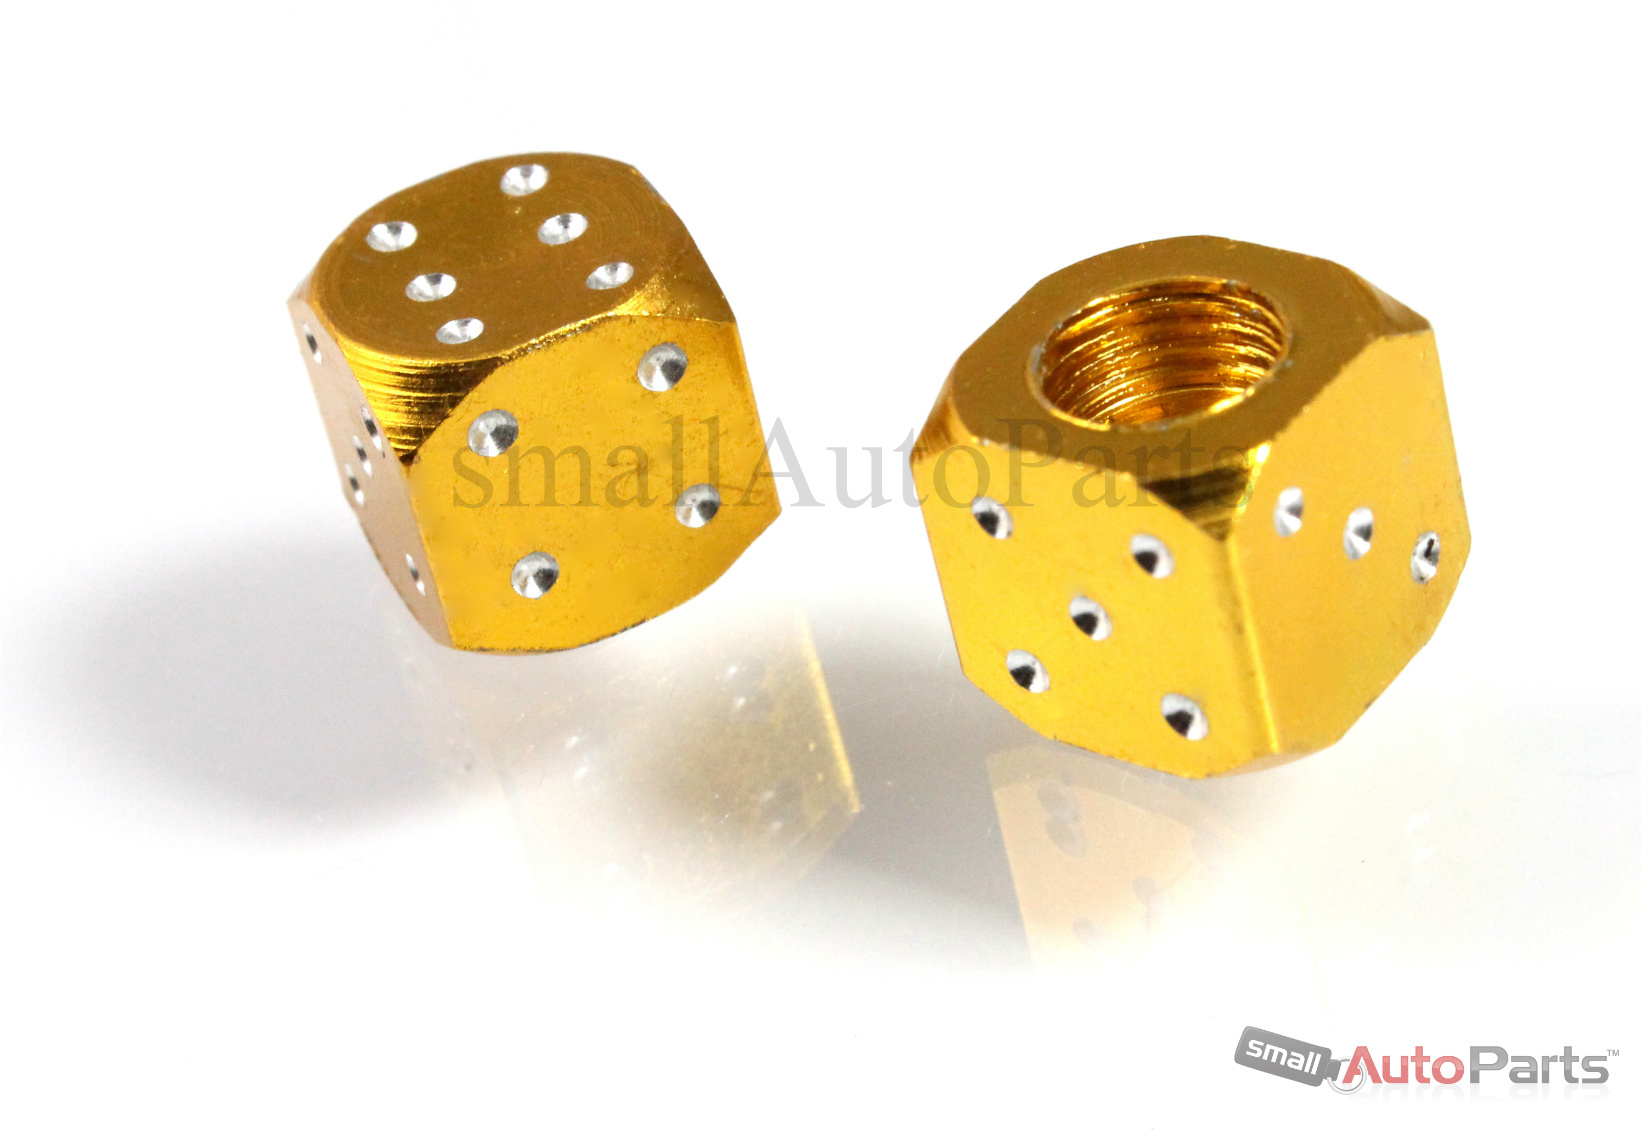 2 Yellow Gold Aluminum Dice Metal Tire Wheel Air Stem Valve Caps for Motorcycle